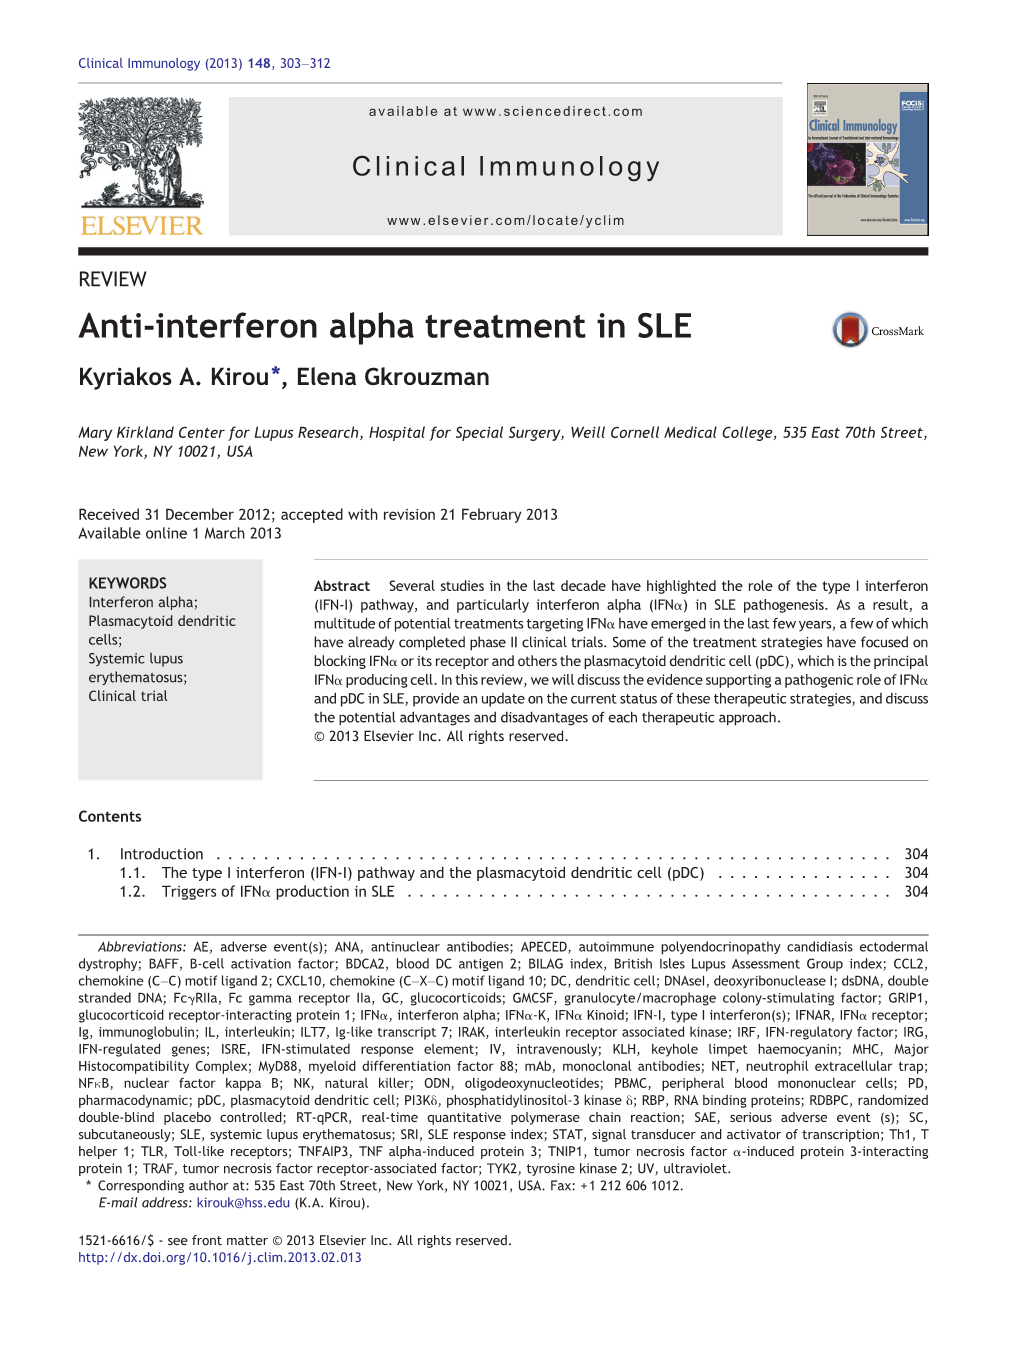 Anti-Interferon Alpha Treatment in SLE Kyriakos A